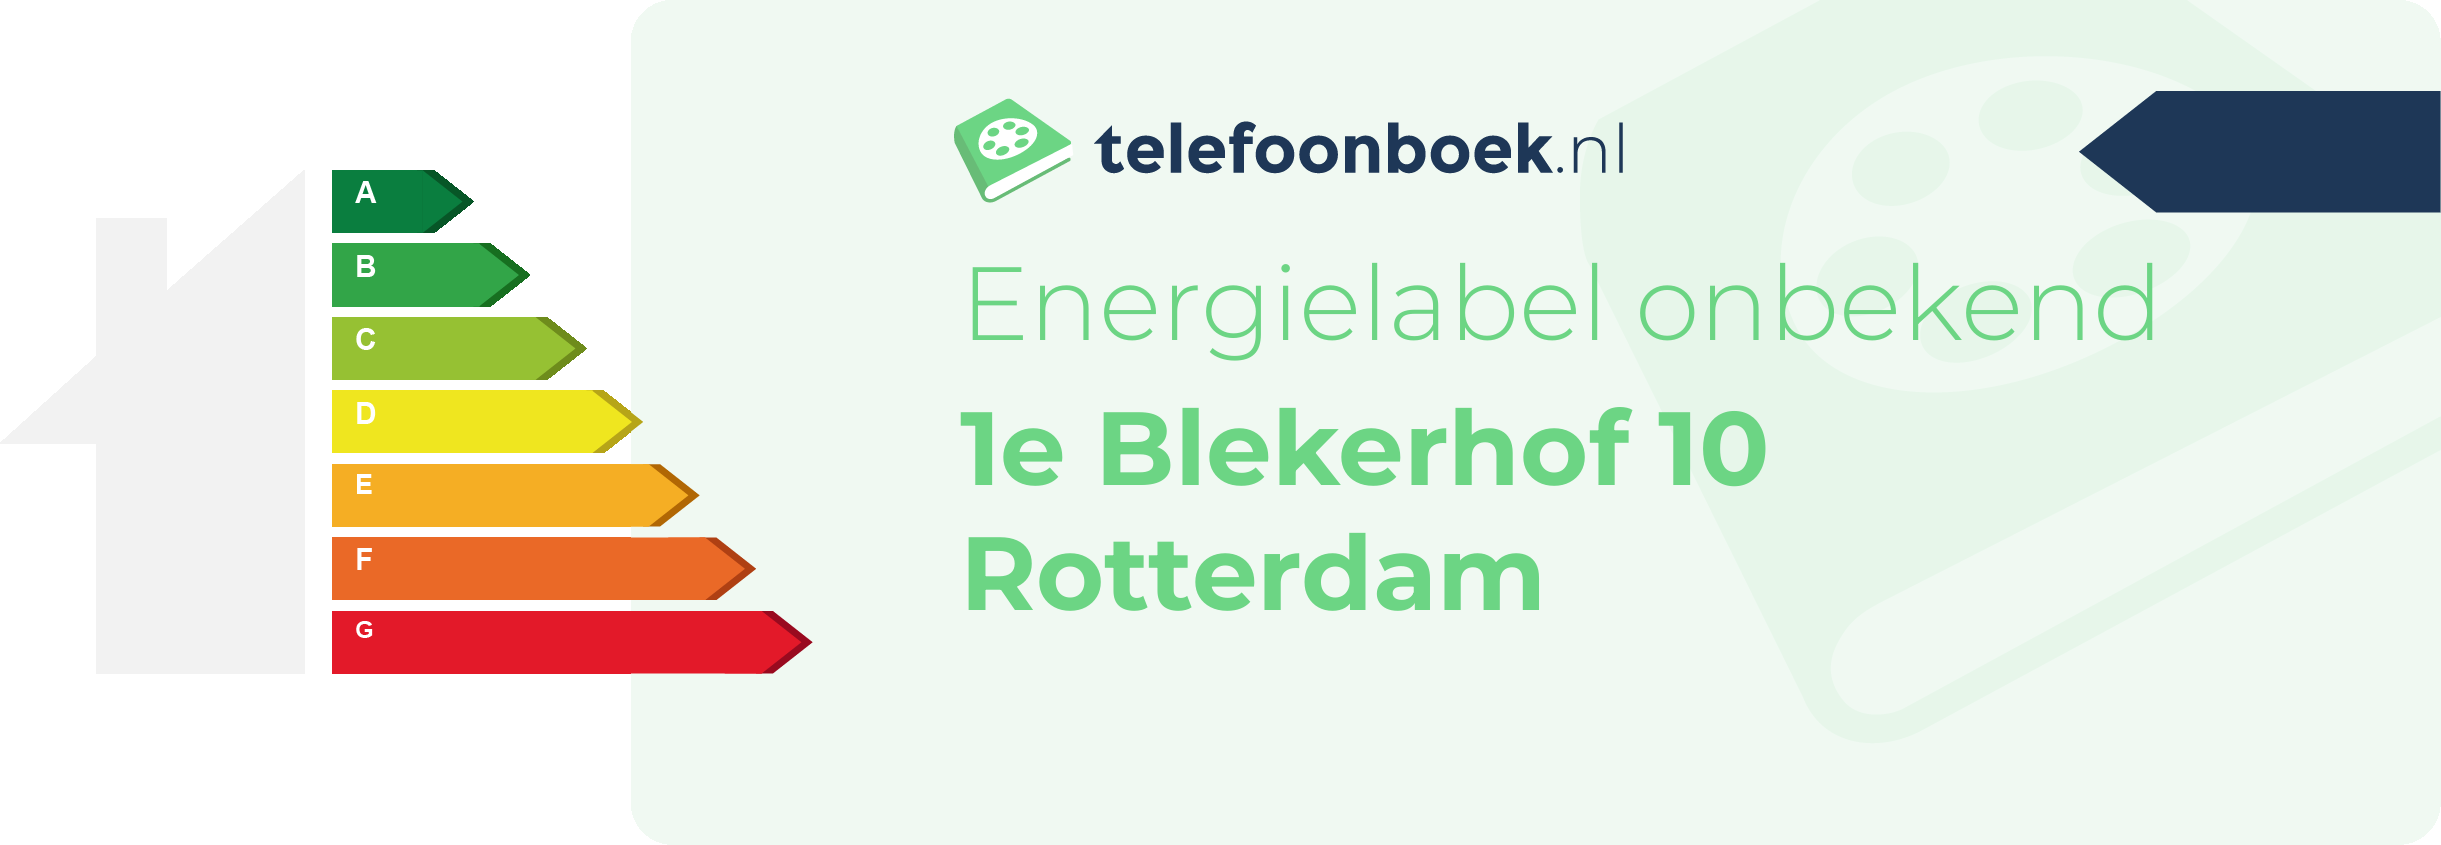 Energielabel 1e Blekerhof 10 Rotterdam